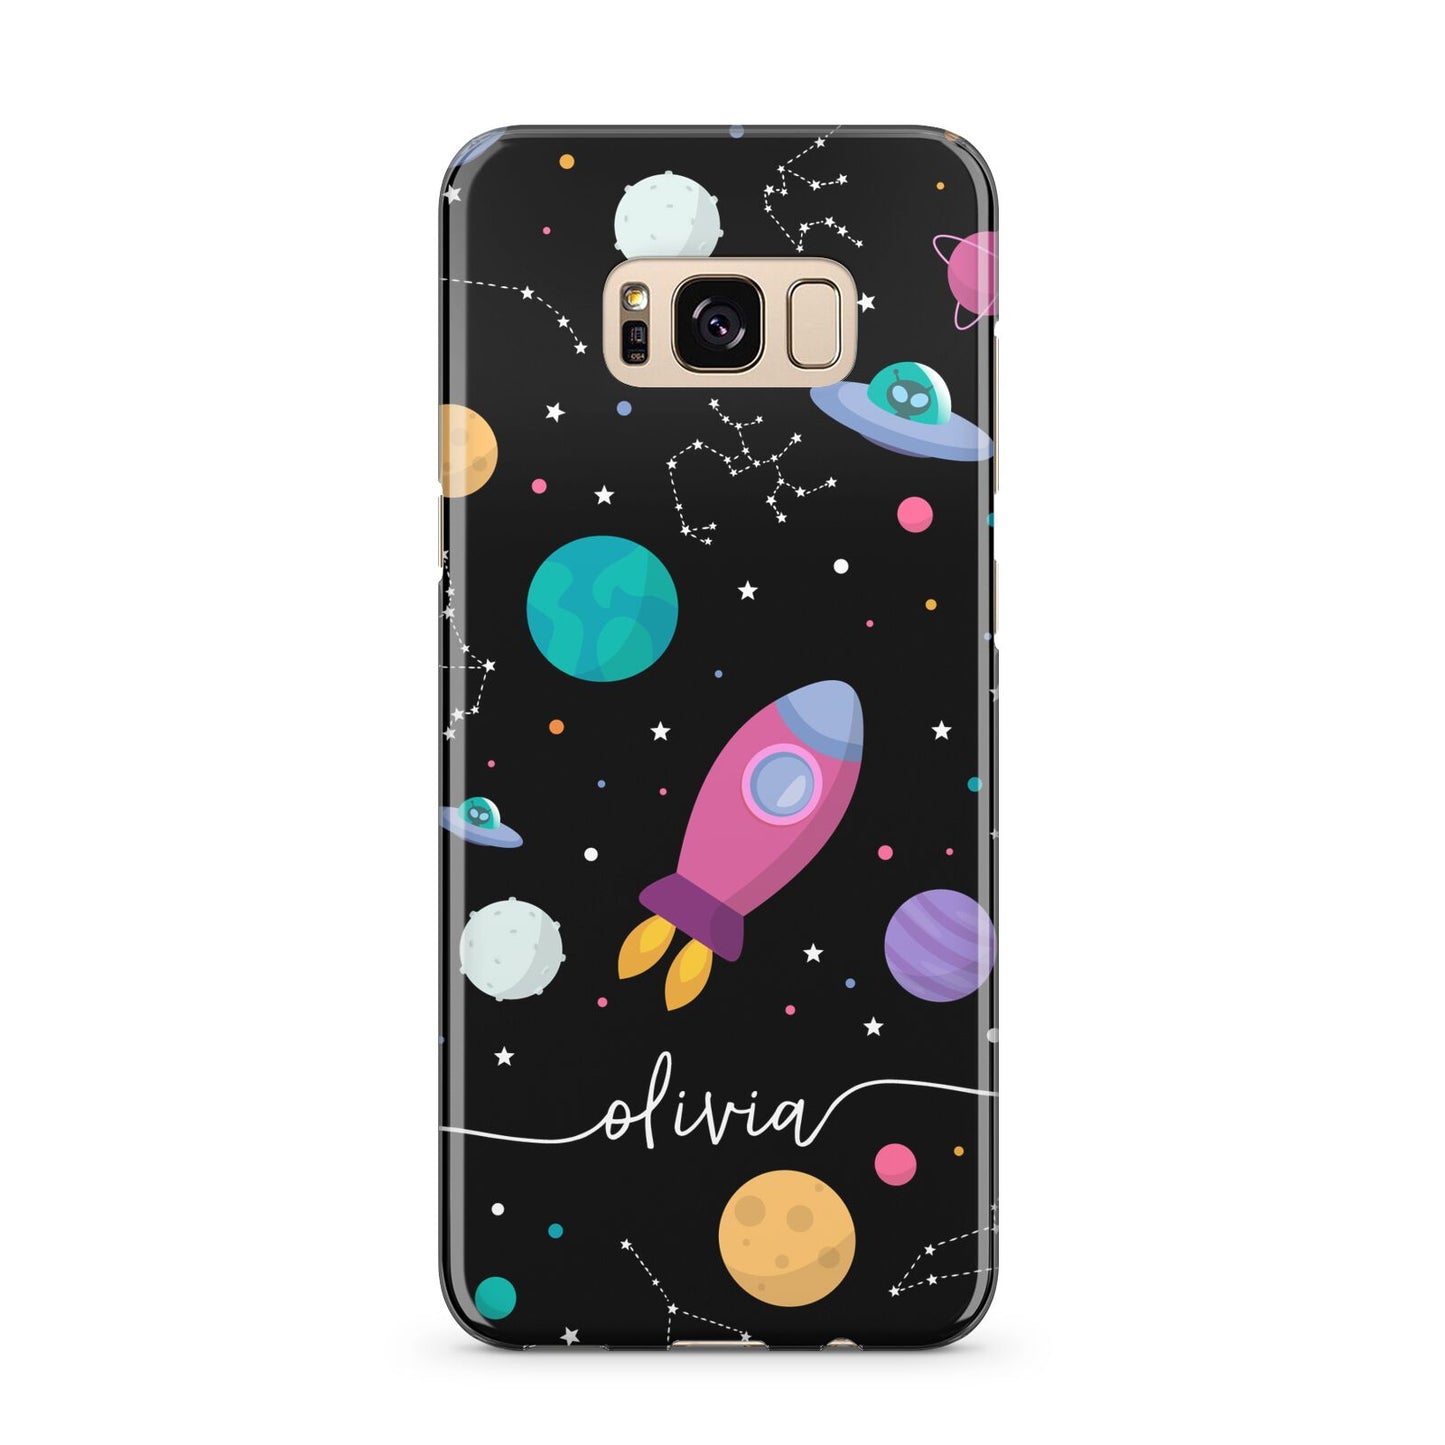 Galaxy Artwork with Name Samsung Galaxy S8 Plus Case